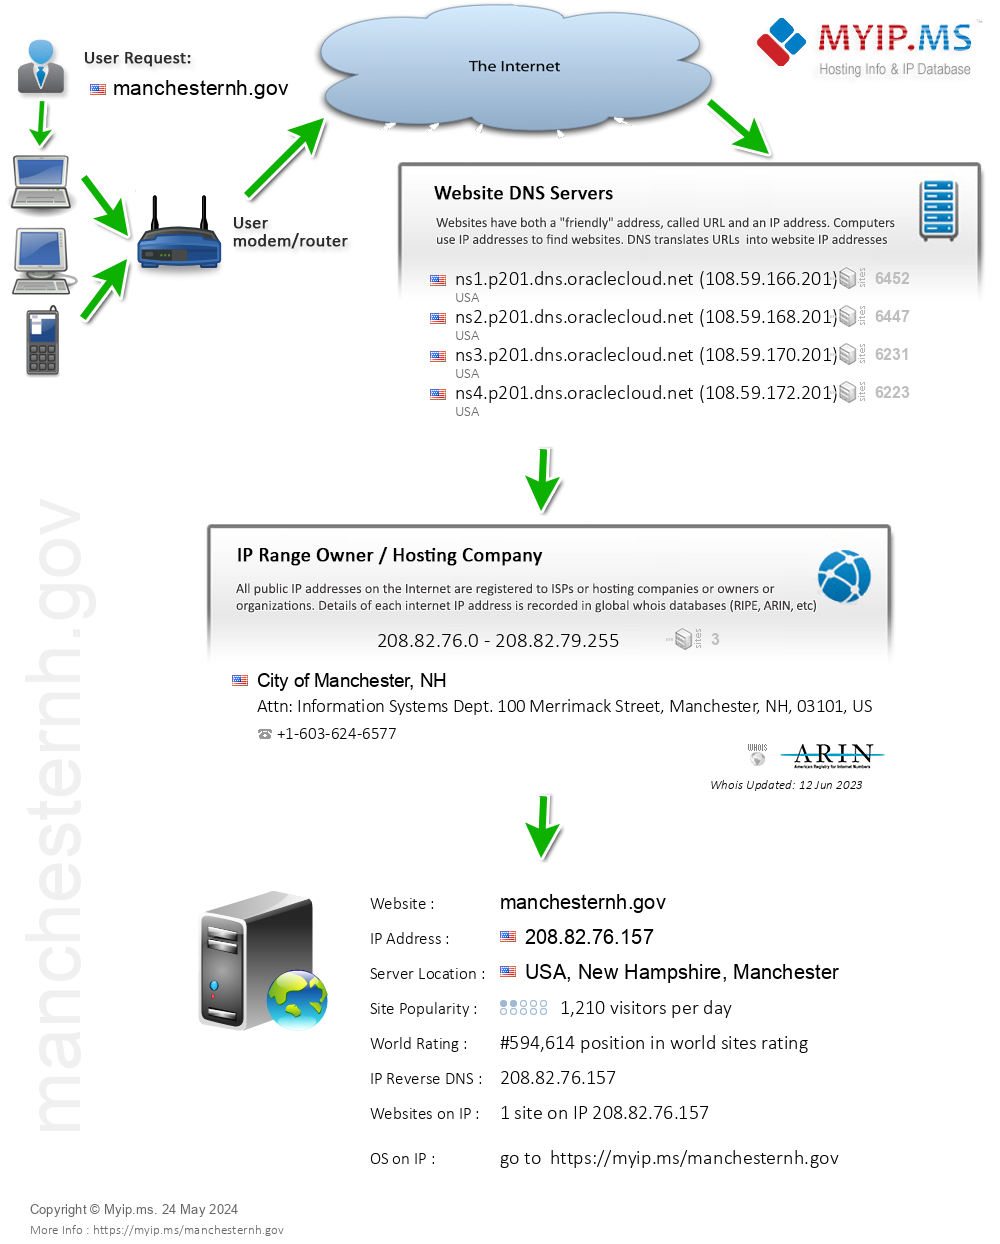 Manchesternh.gov - Website Hosting Visual IP Diagram